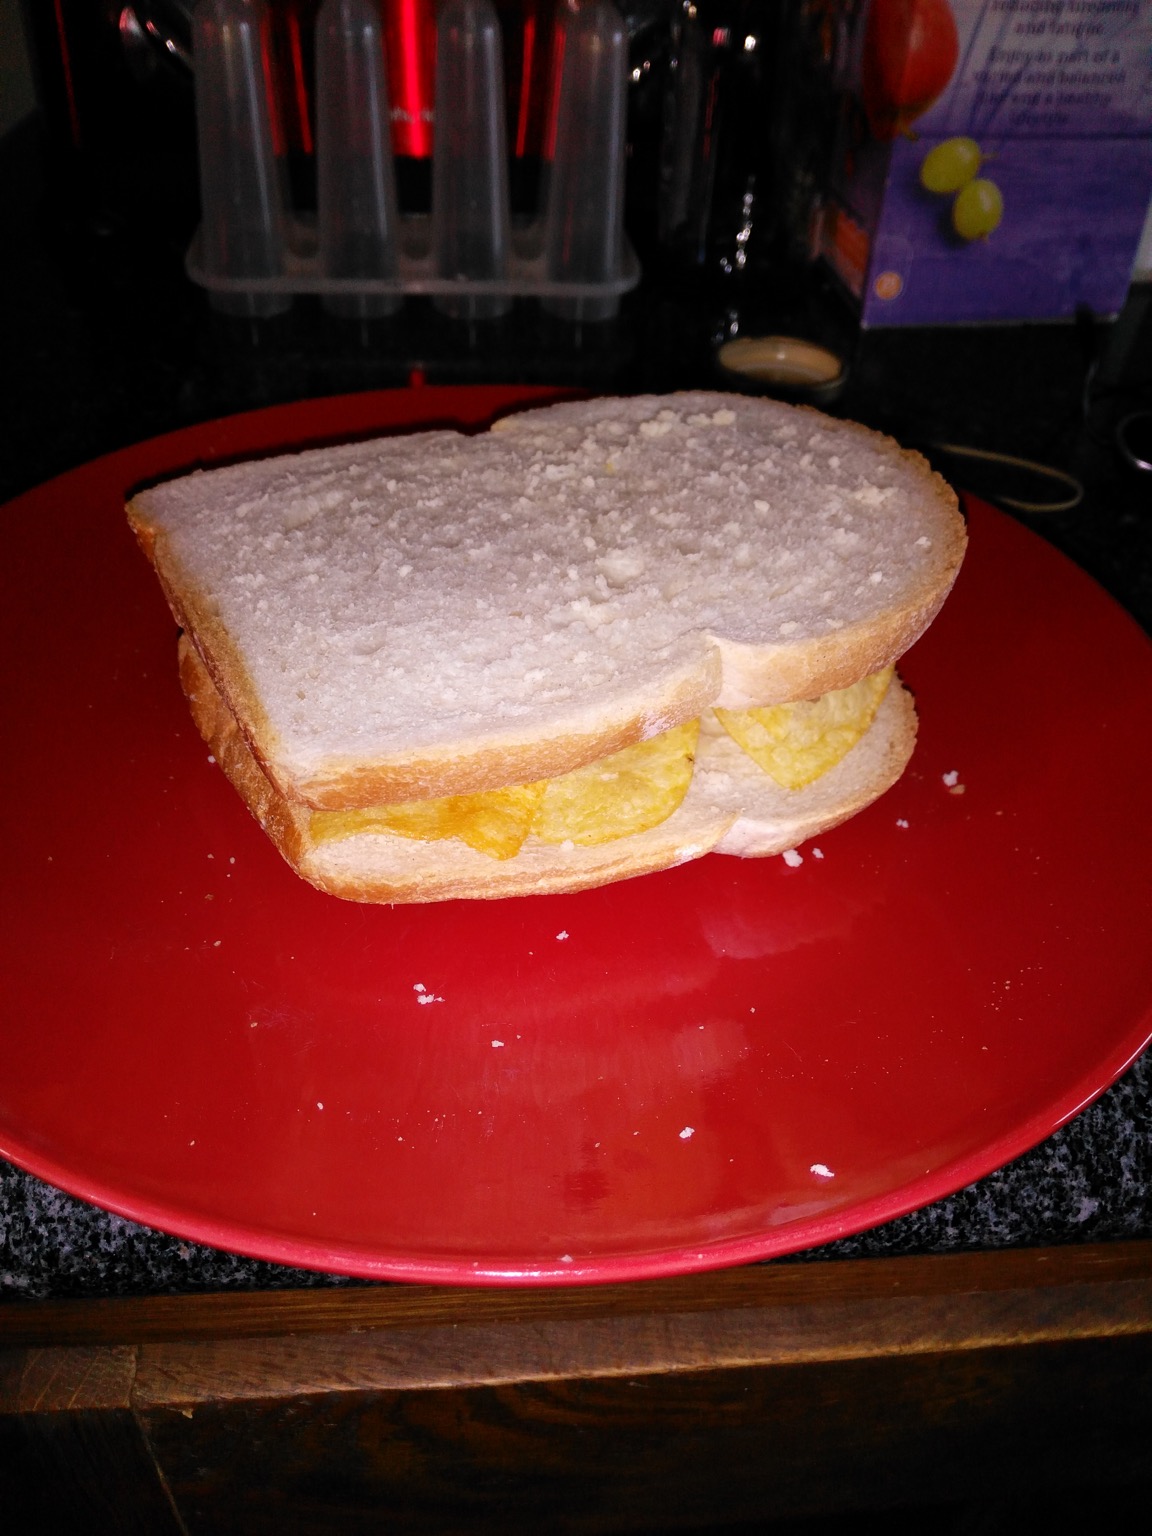 Flash photo of white crisp sandwich